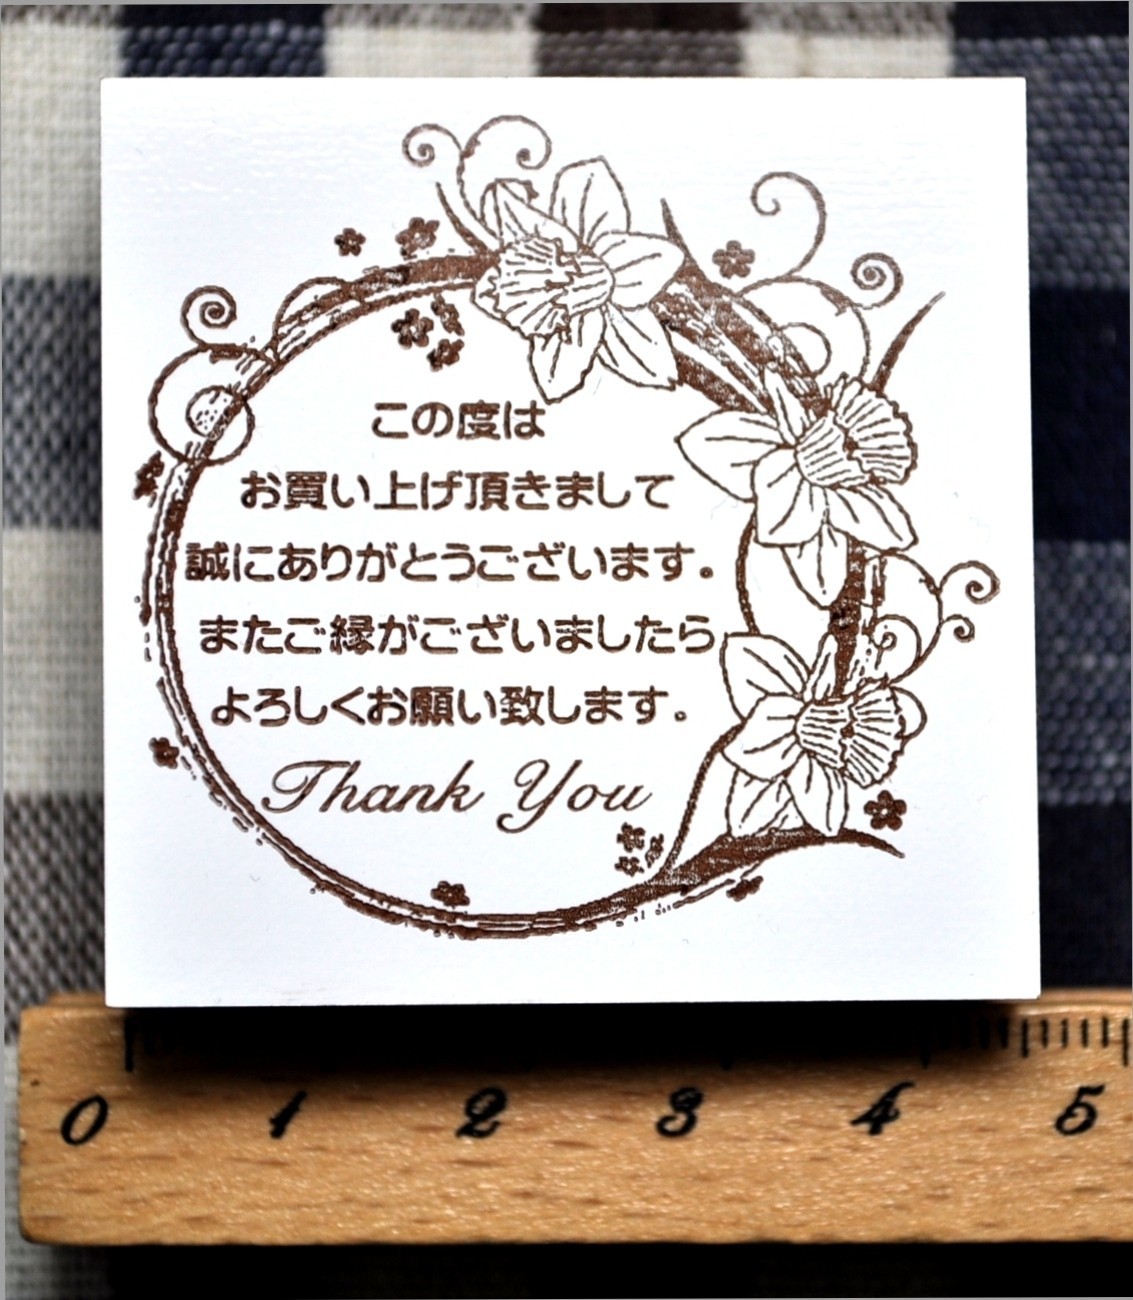 Flower正方形お礼のスタンプ はんこ Iichi ハンドメイド クラフト作品 手仕事品の通販